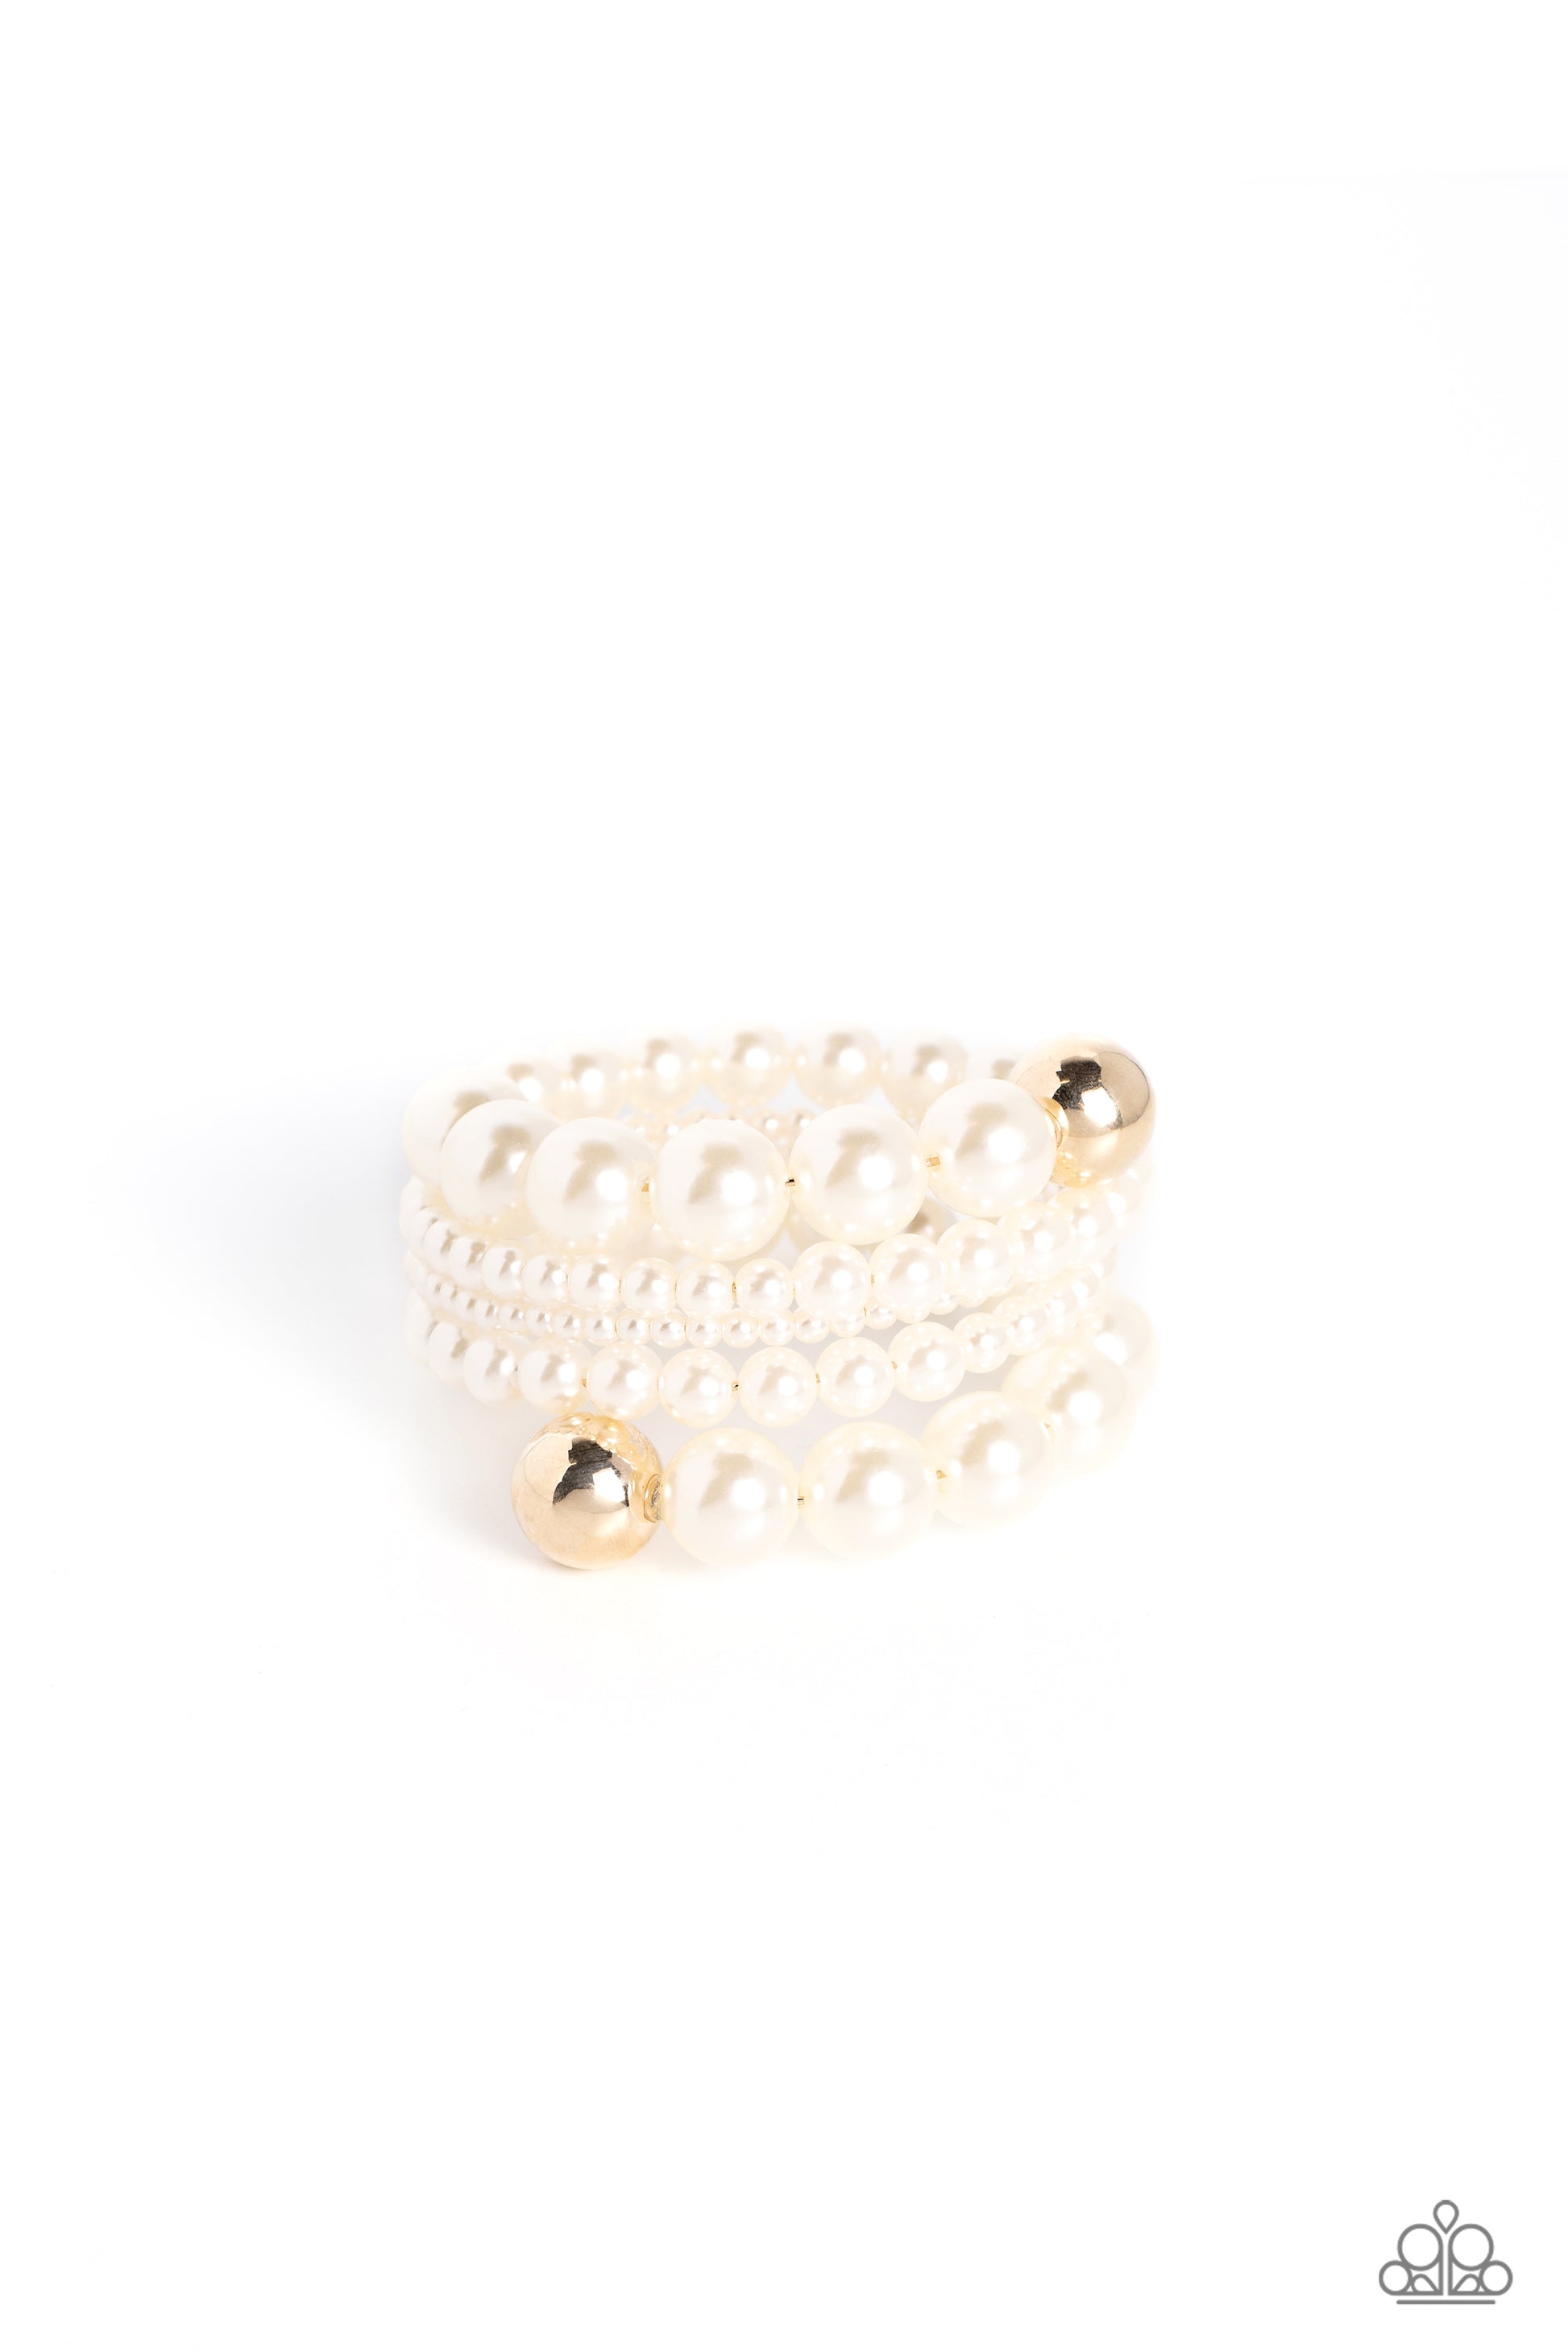 Pleasing Pirouette Gold Pearl Bracelet - Paparazzi Accessories